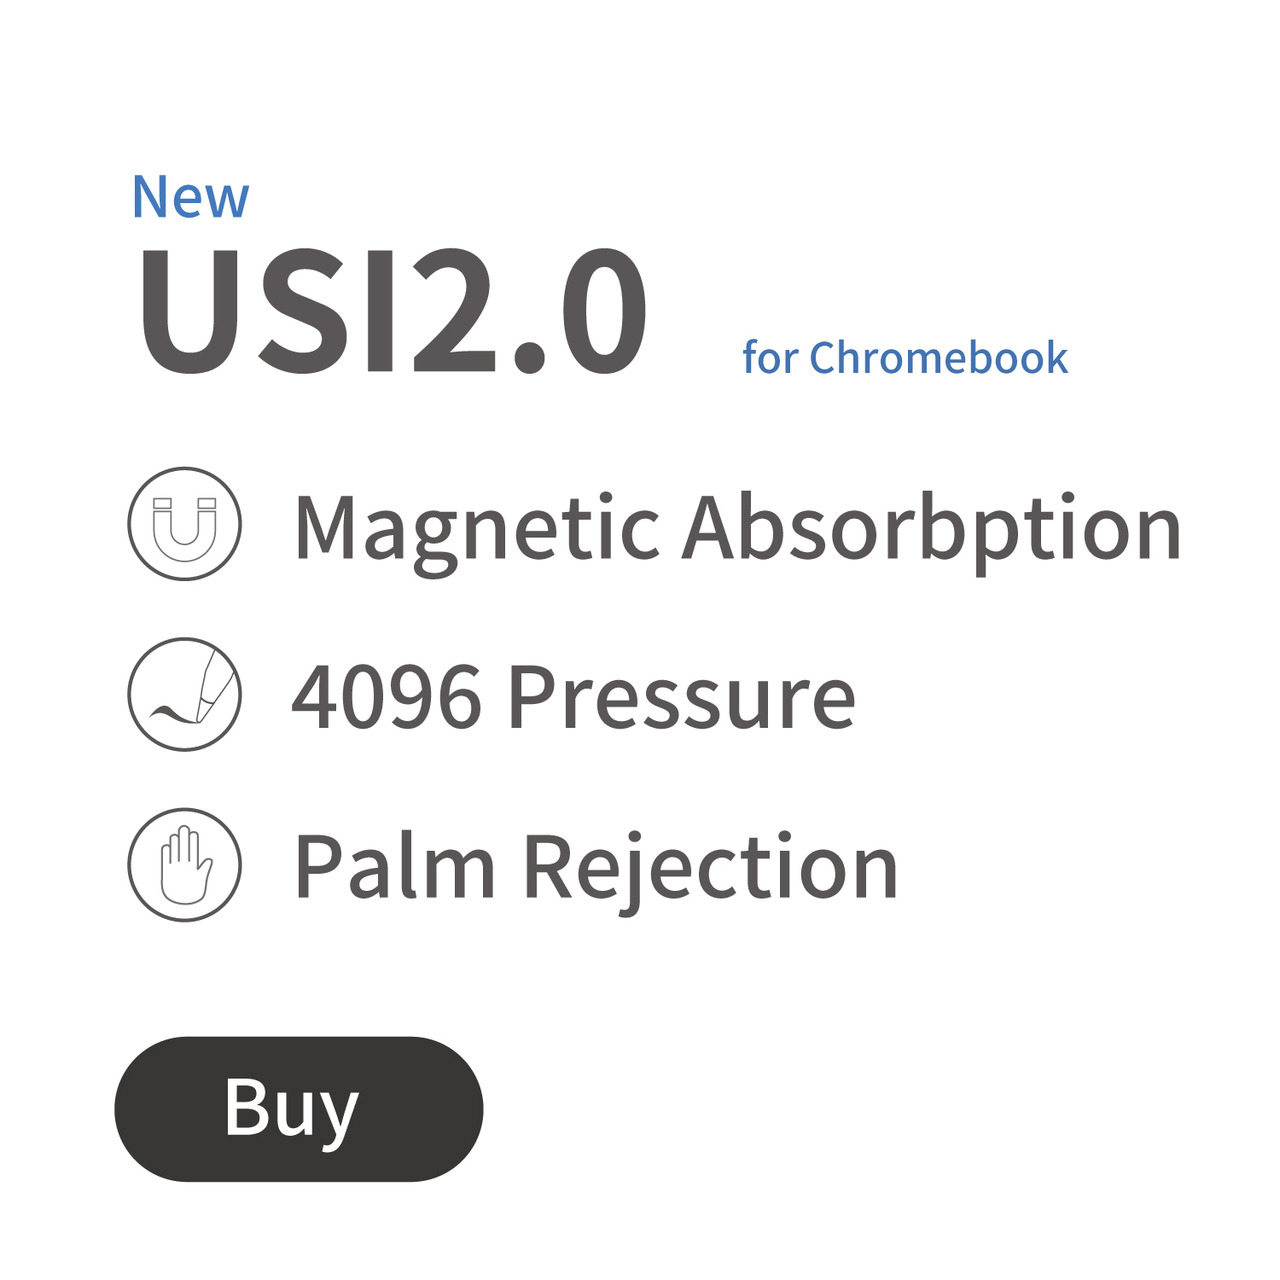 USI2.0 for Chromebook